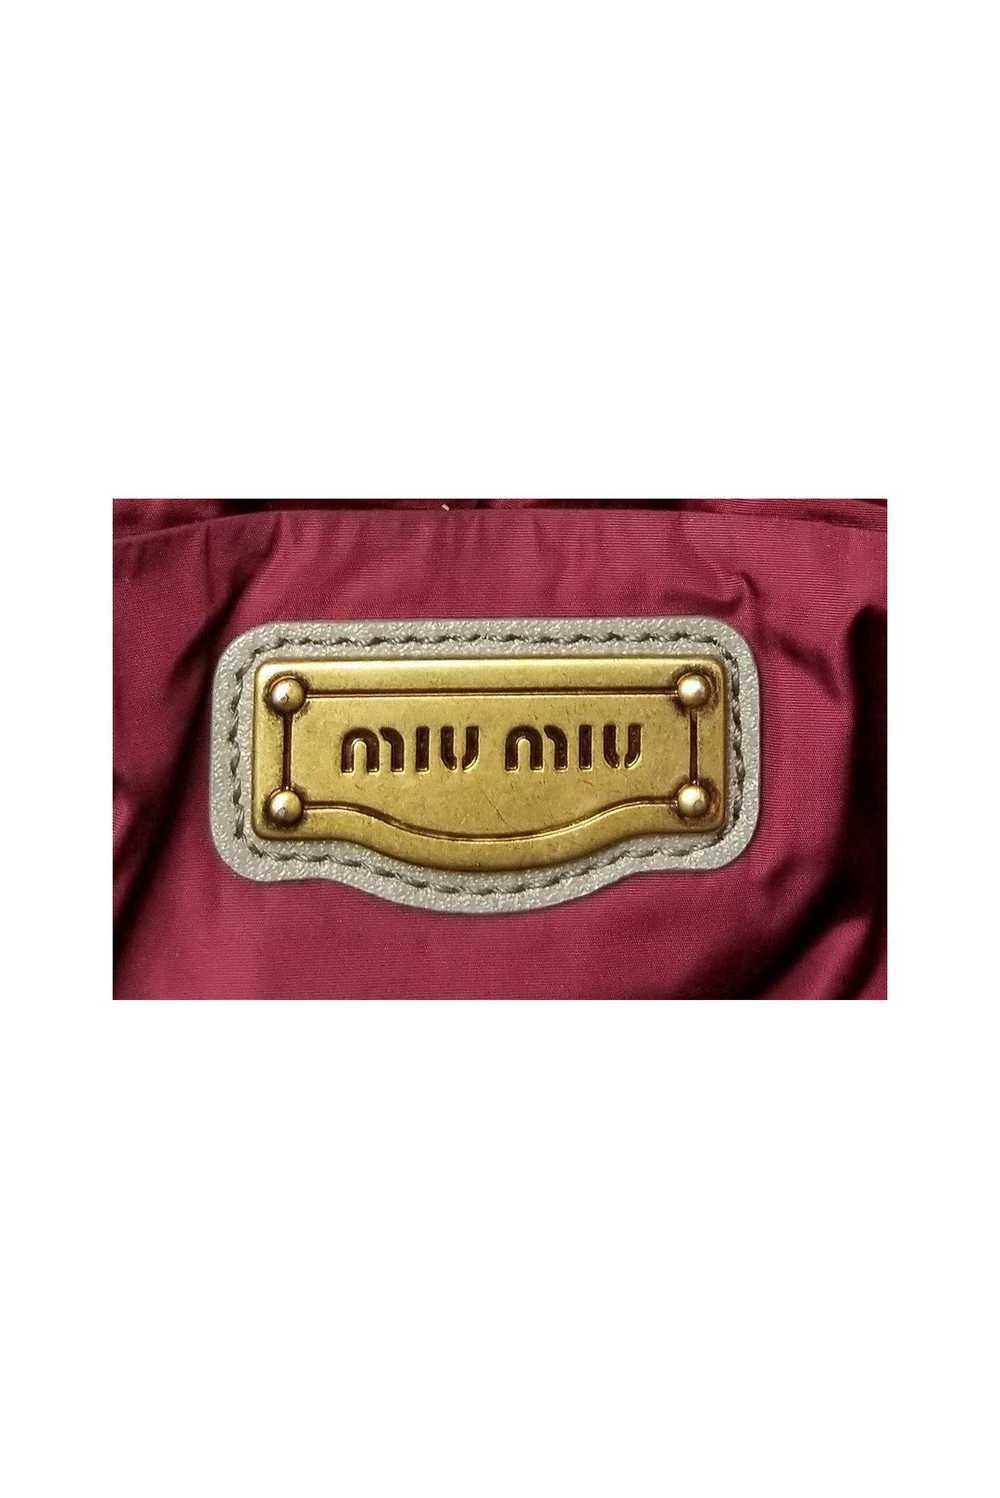 Miu Miu - Grey Quilted Leather Tote Bag - image 6